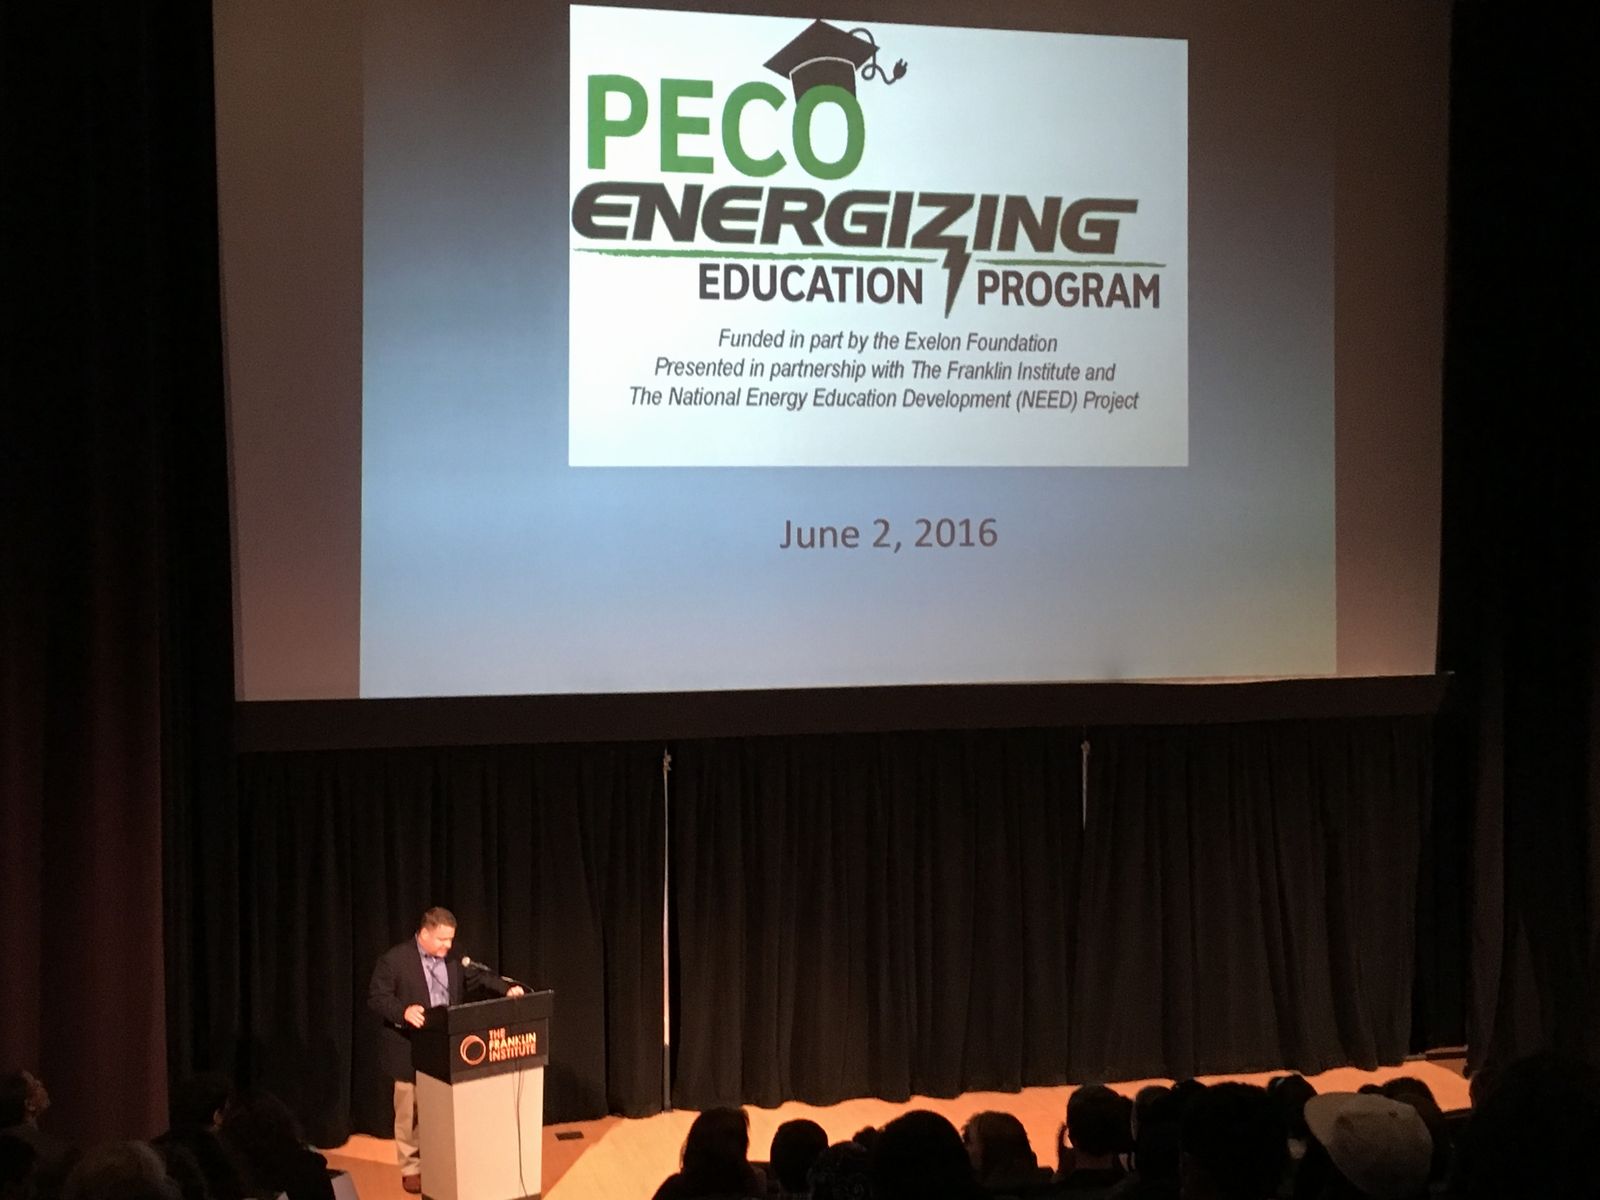 Lecturer at PECO Energizing Education Program